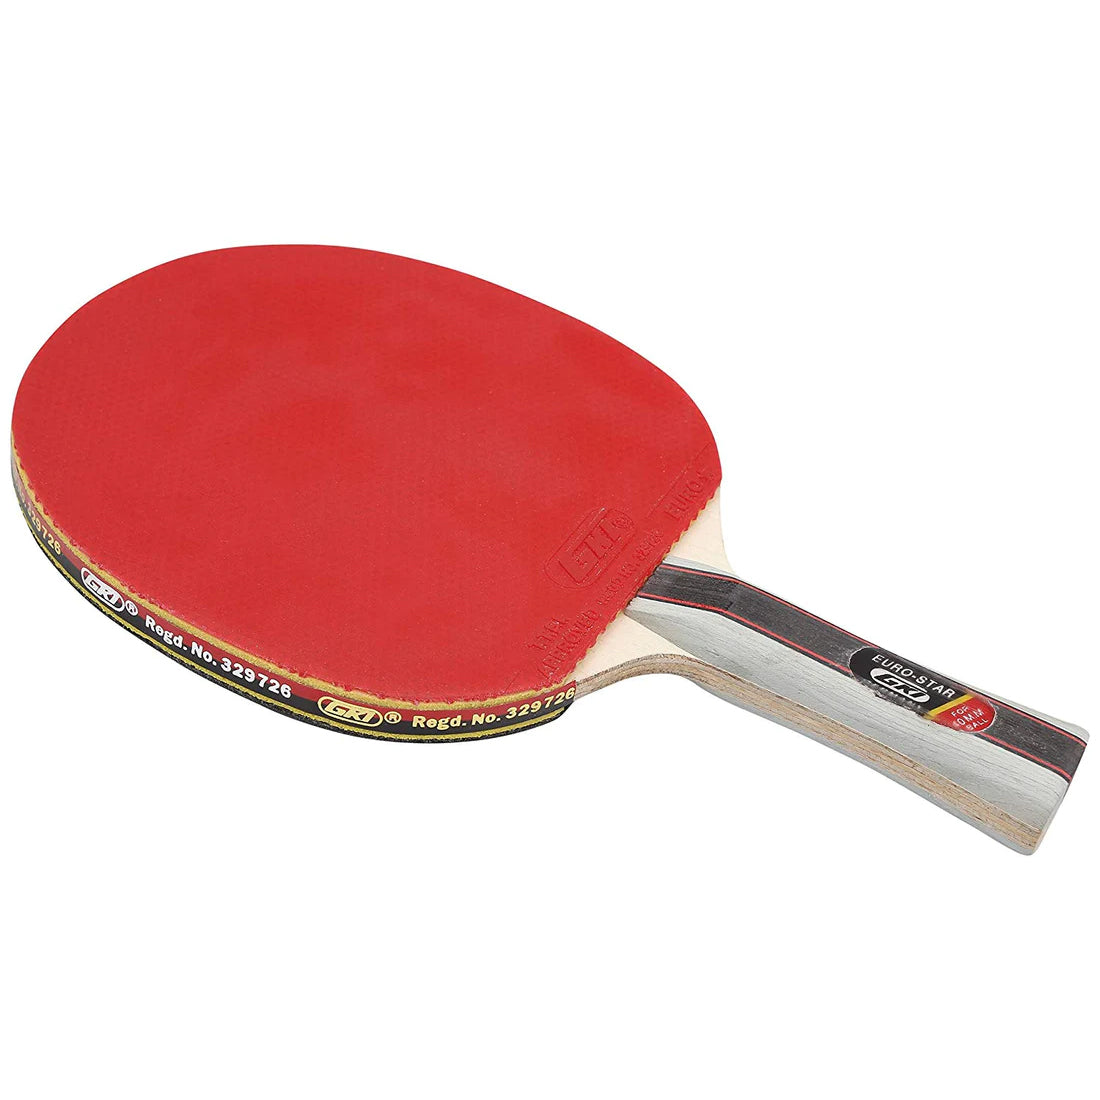 GKI Euro star Table Tennis Racket - Best Price online Prokicksports.com